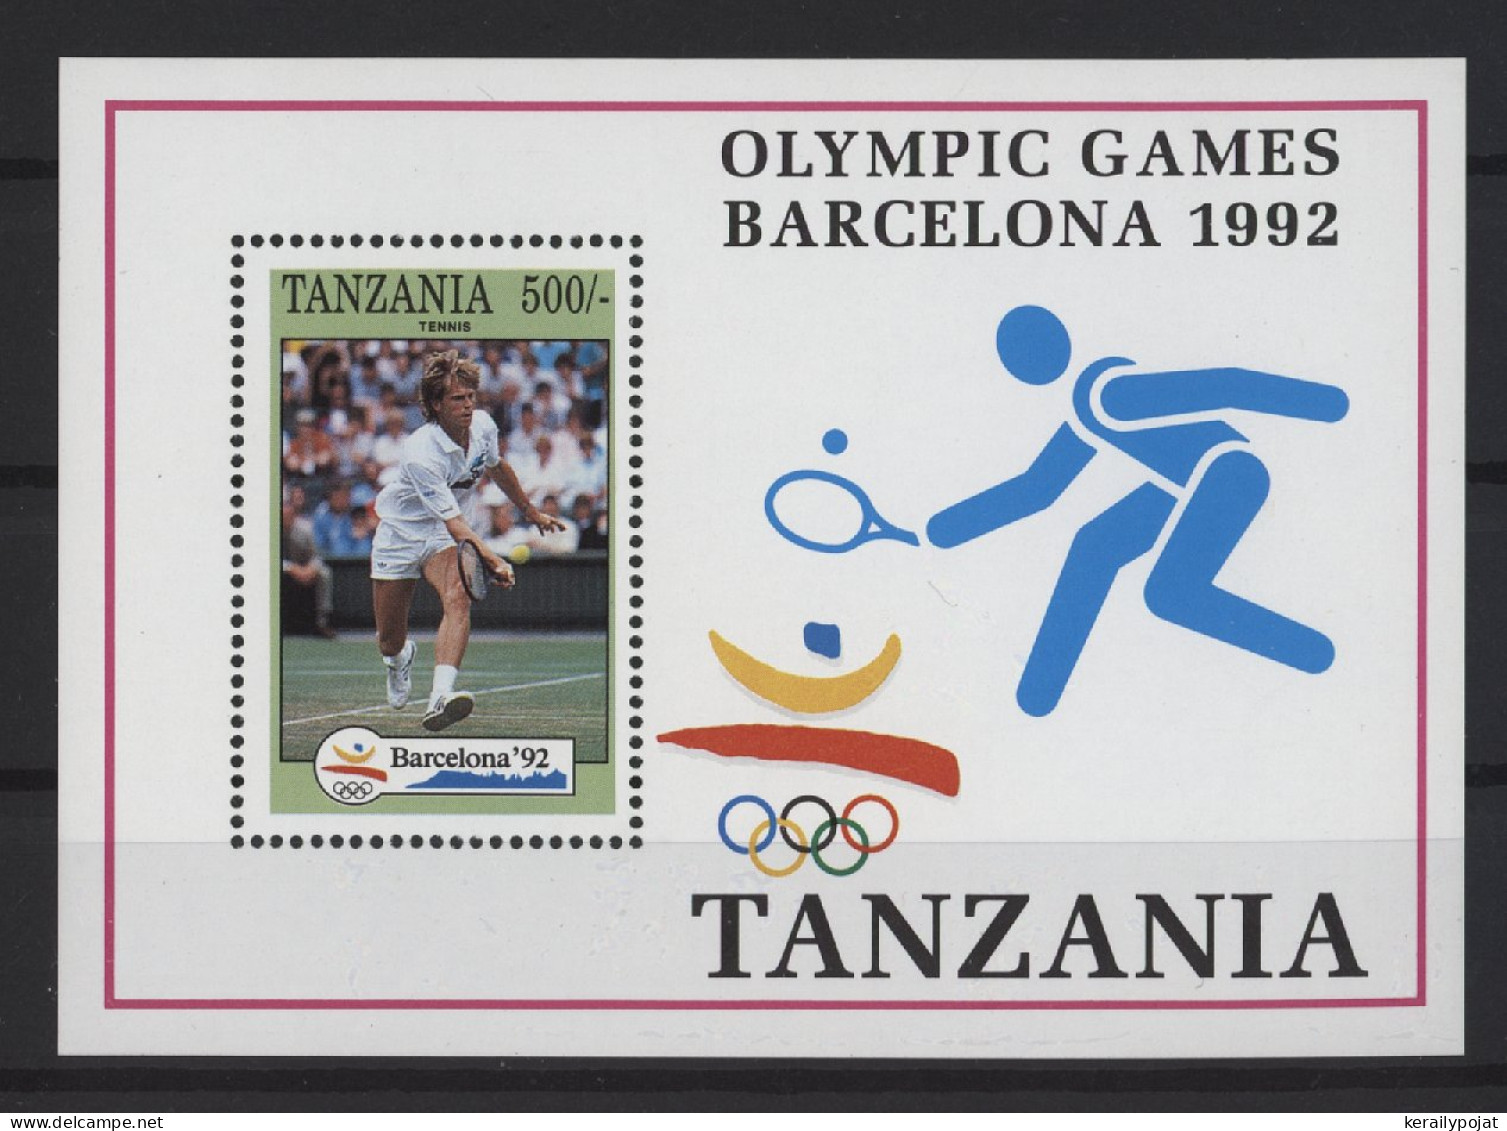 Tanzania - 1992 Albertville And Barcelona Block (1) MNH__(TH-27739) - Tanzania (1964-...)